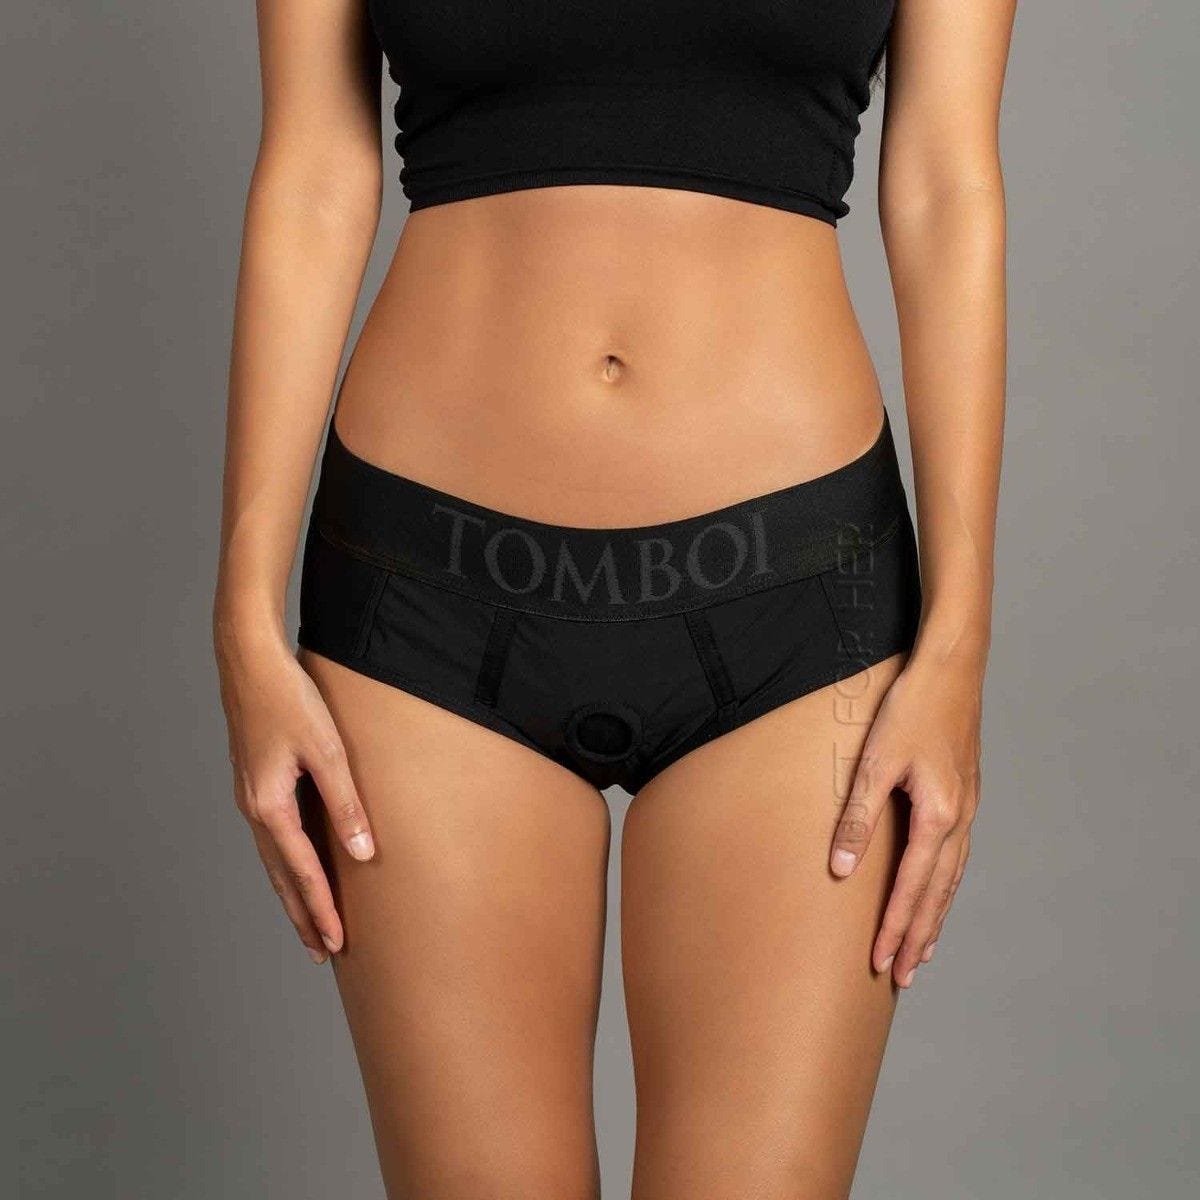 Tomboi Brief Harness Underwear by SpareParts Wet For